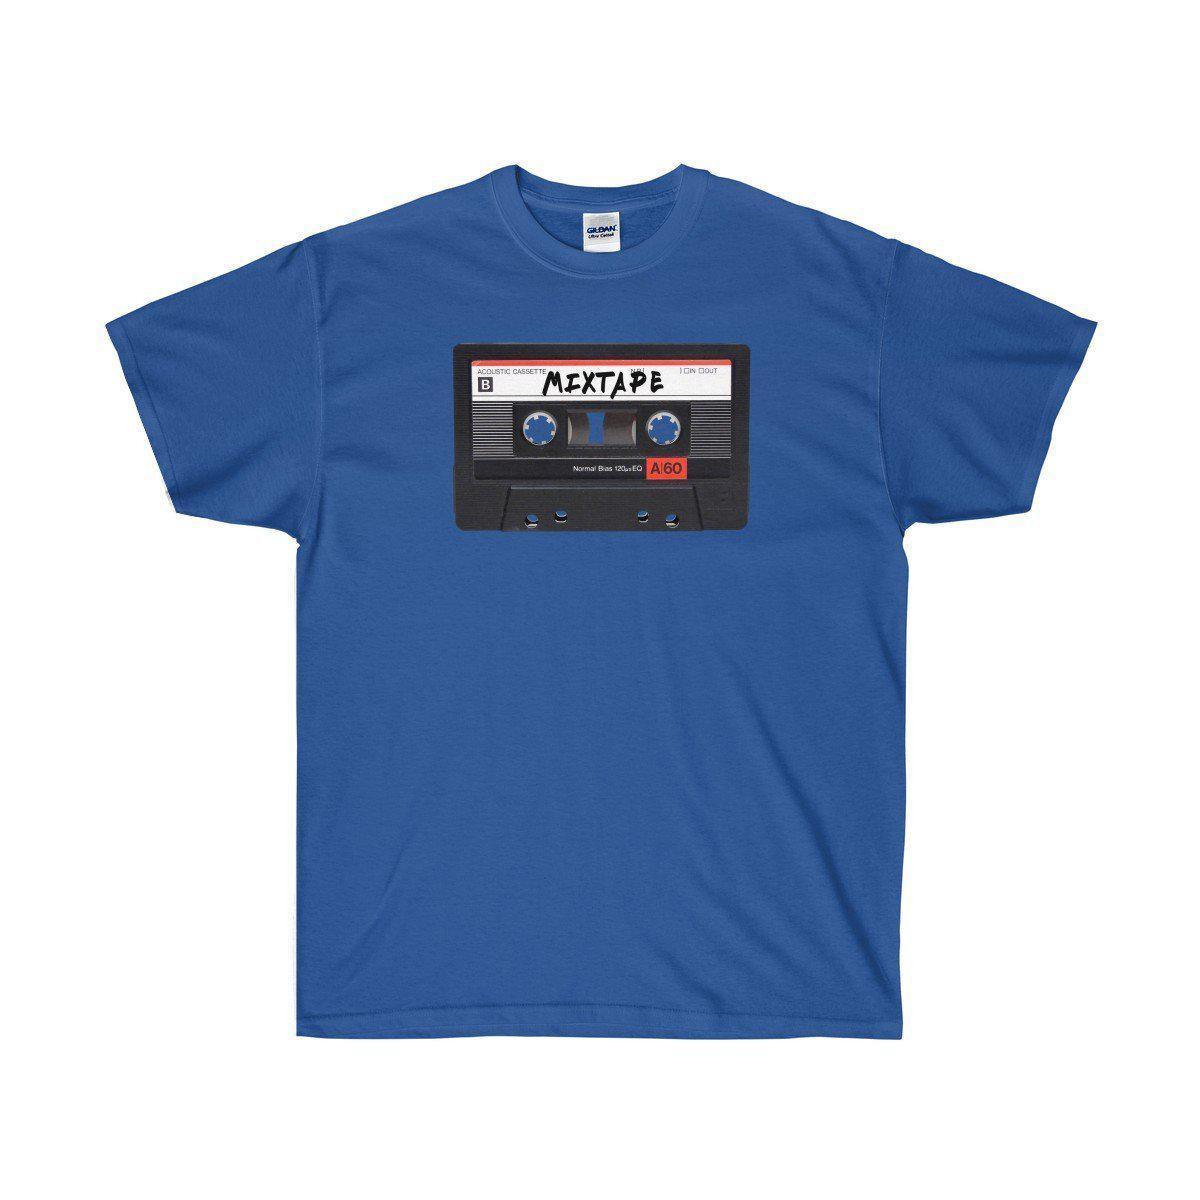 Mixtape Ultra Cotton Tee Shirt - 90's Retro Hip Hop tee-Royal-S-Archethype